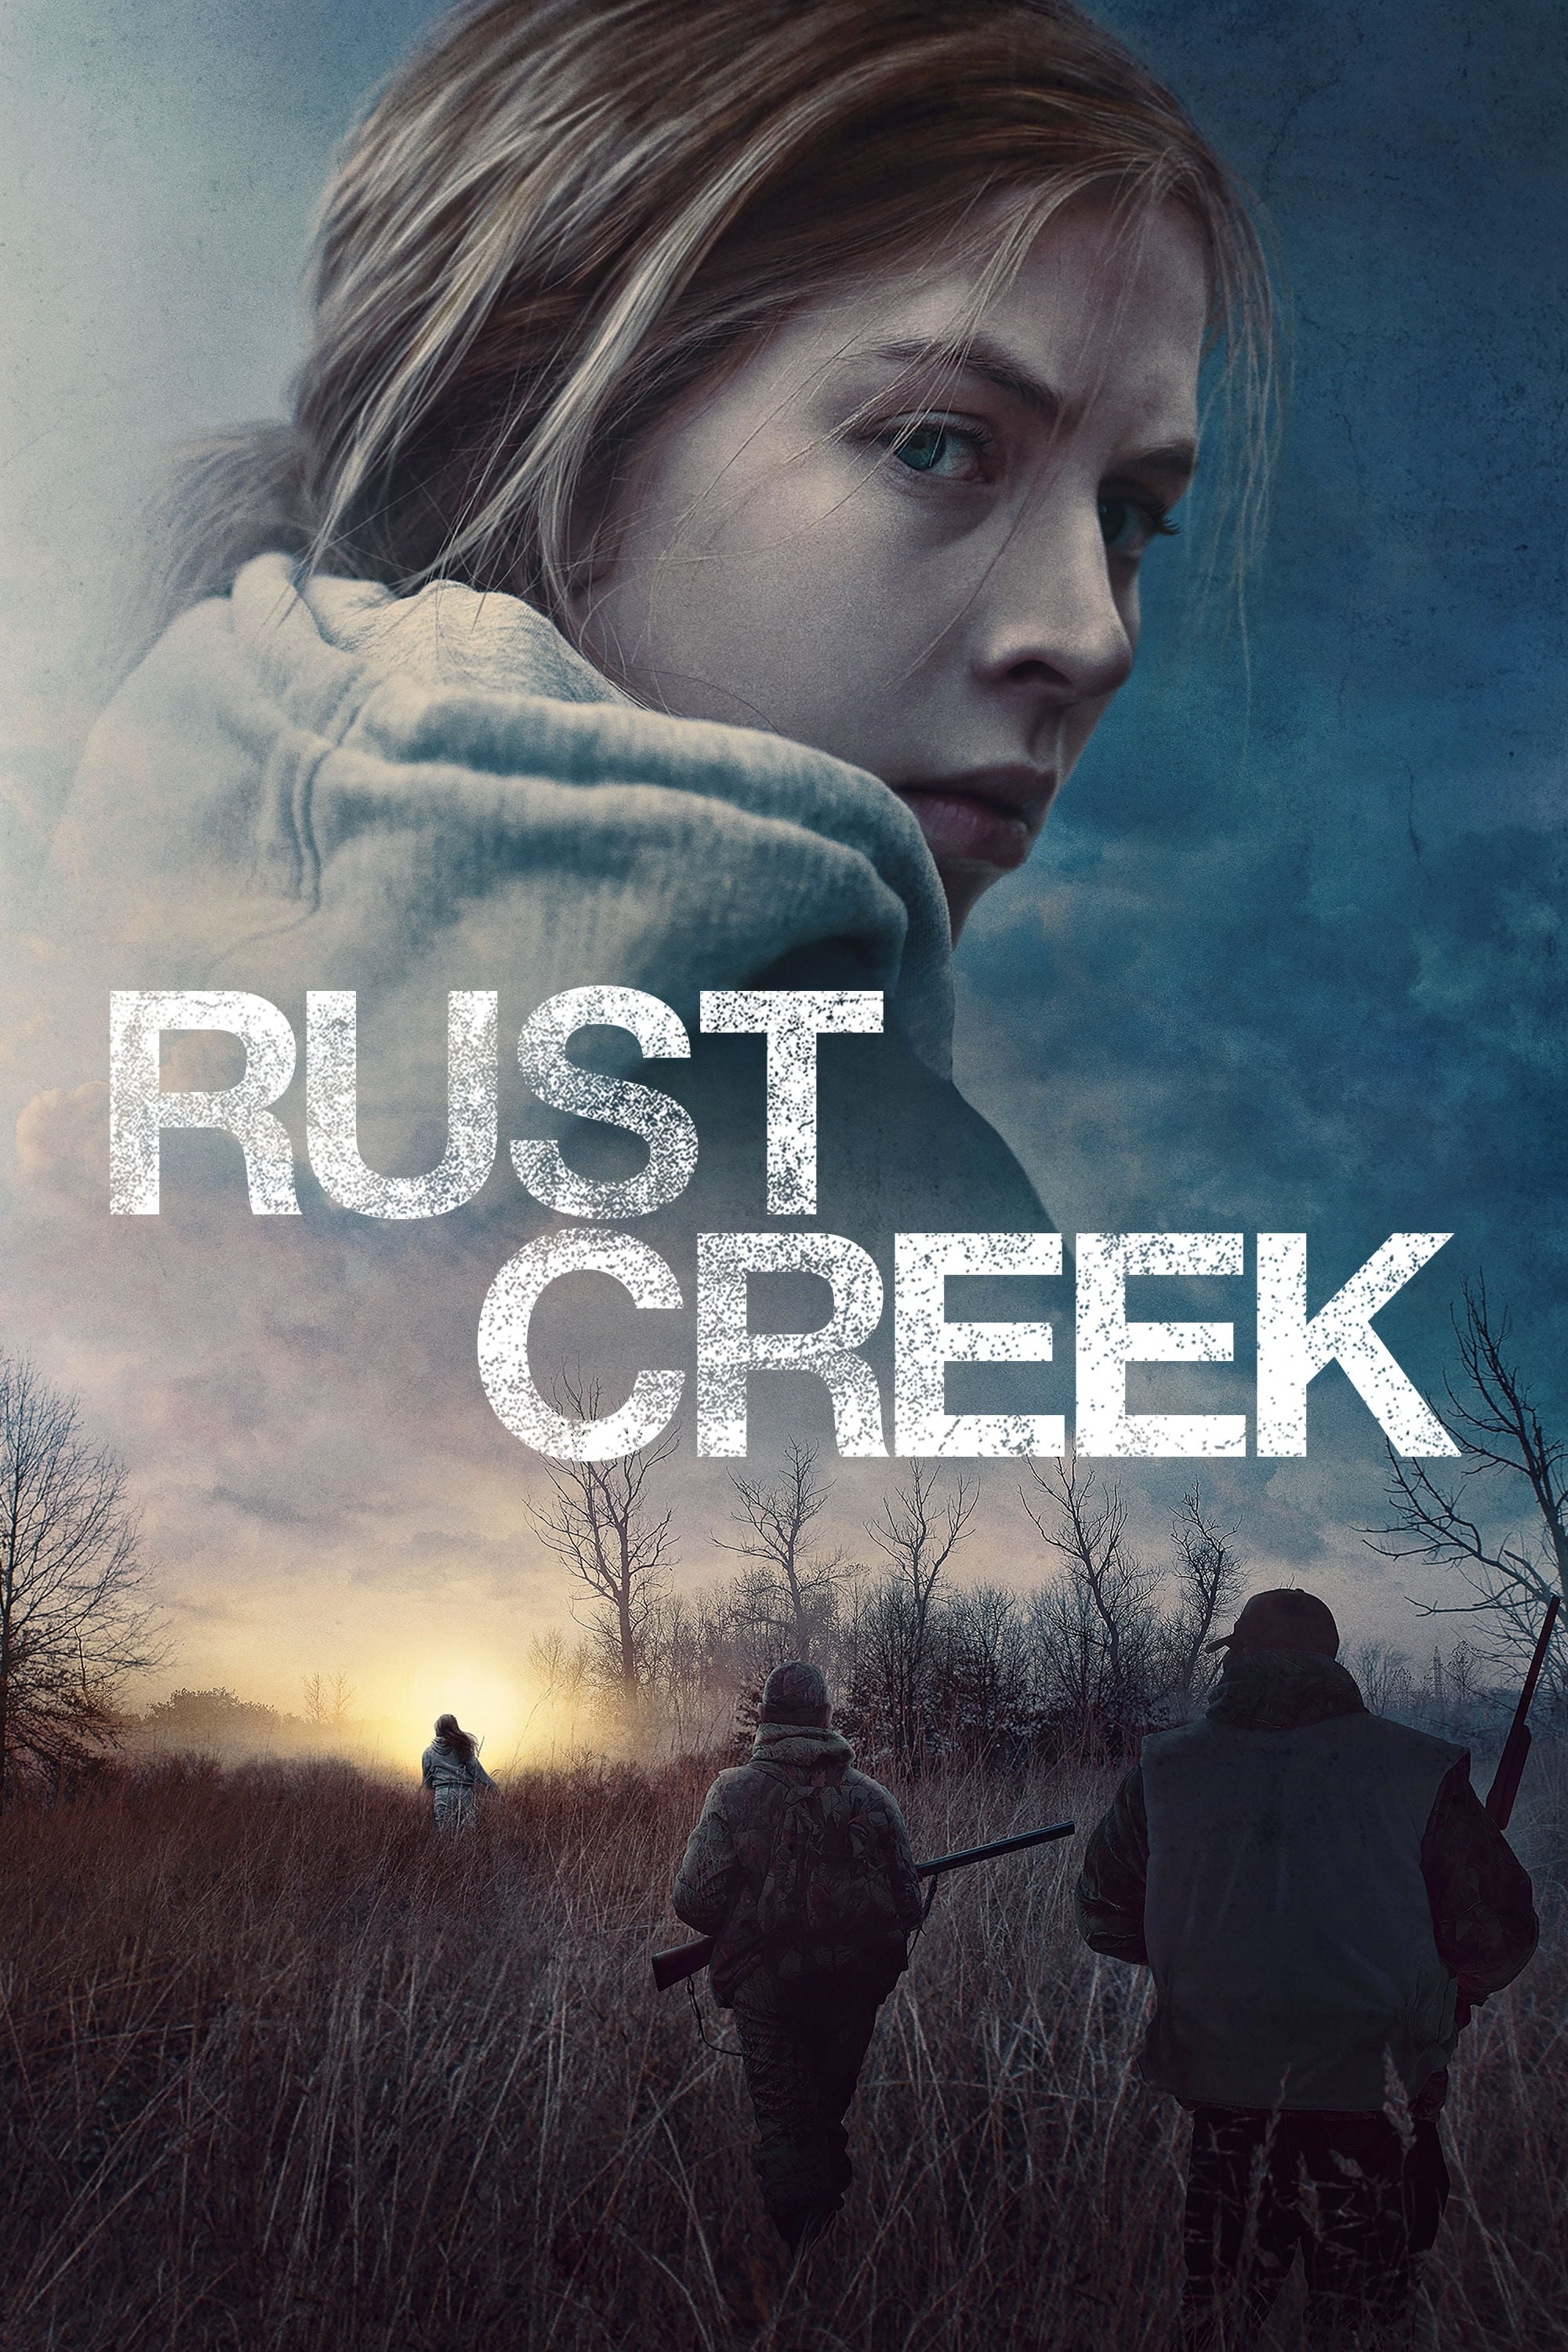 Rust Creek (2019)